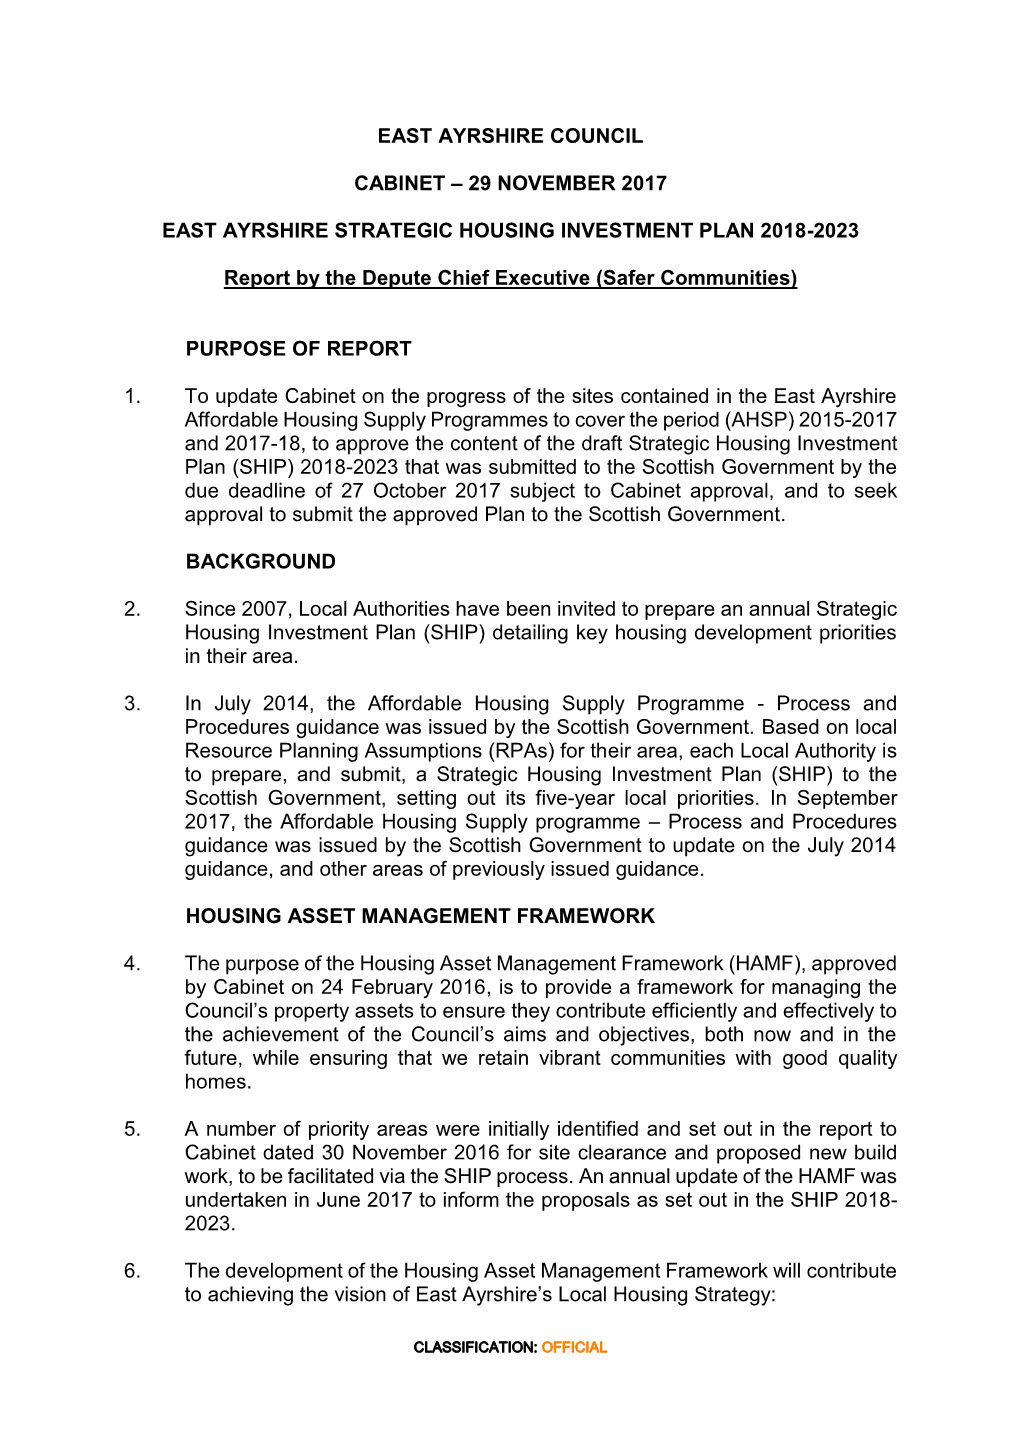 East Ayrshire Strategic Housing Investment Plan 2018-2023